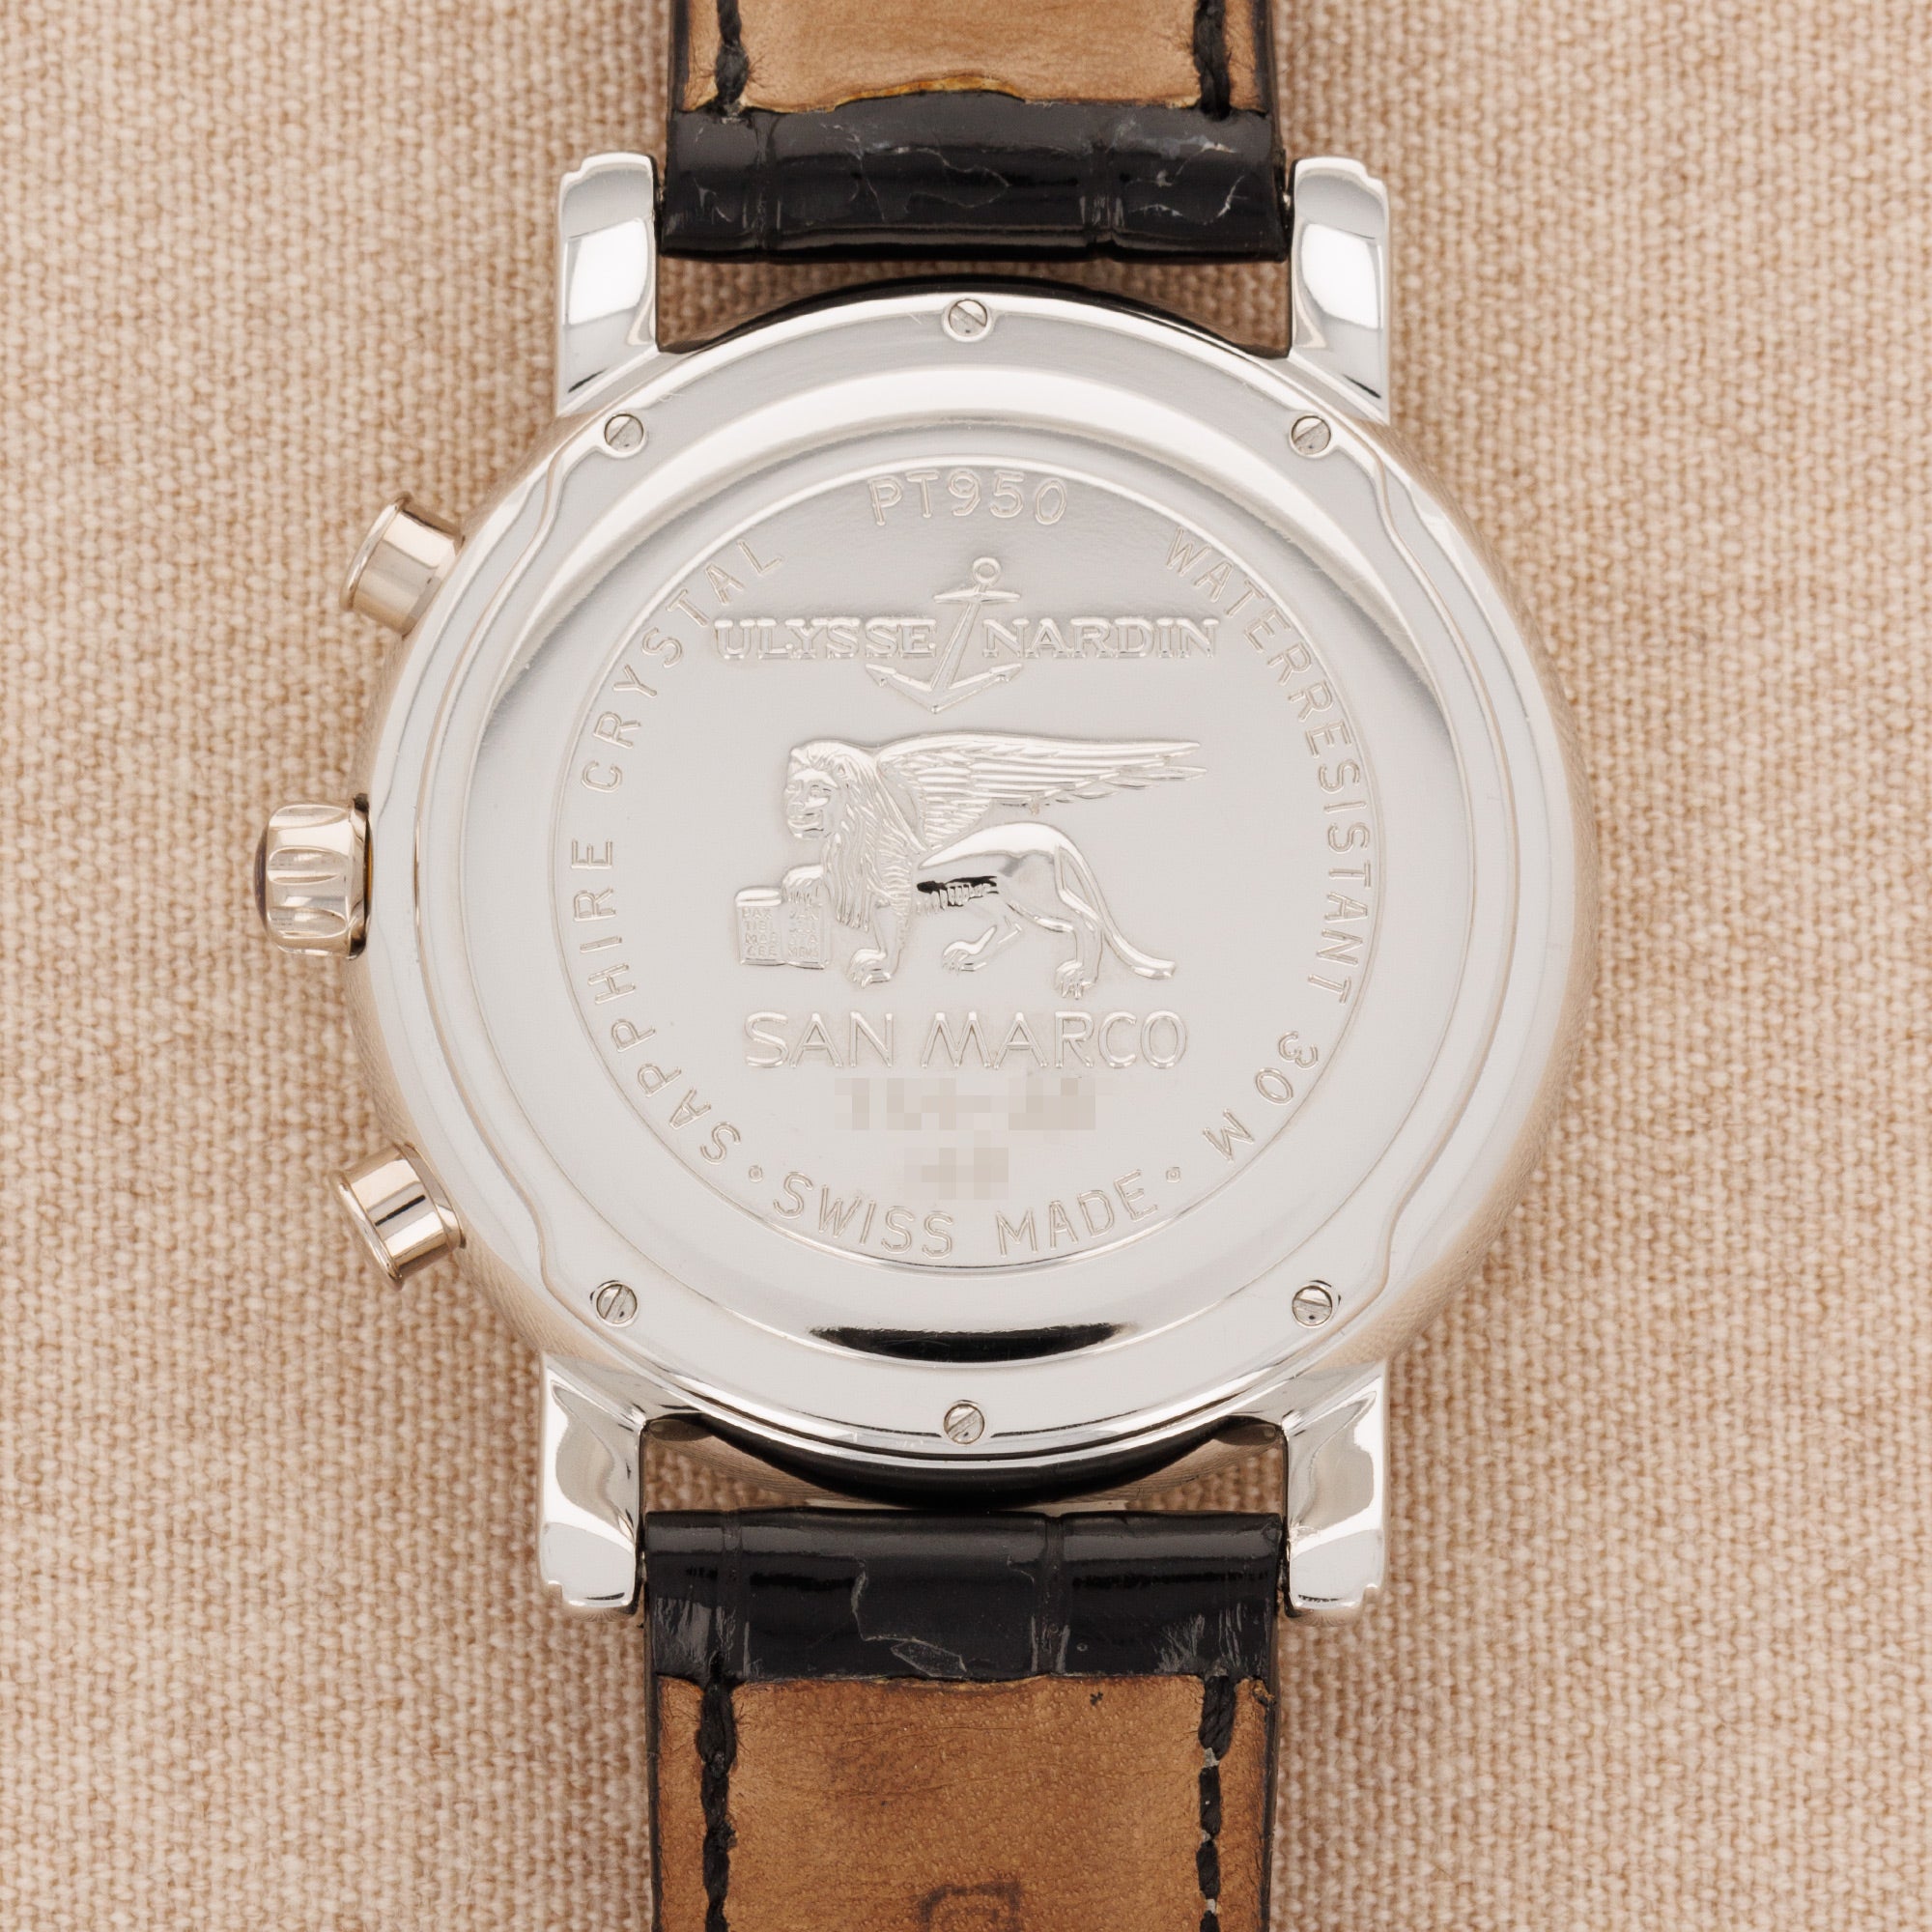 Ulysse Nardin - Ulysse Nardin Platinum San Marco Hour Striker Watch Ref. 759-20 - The Keystone Watches